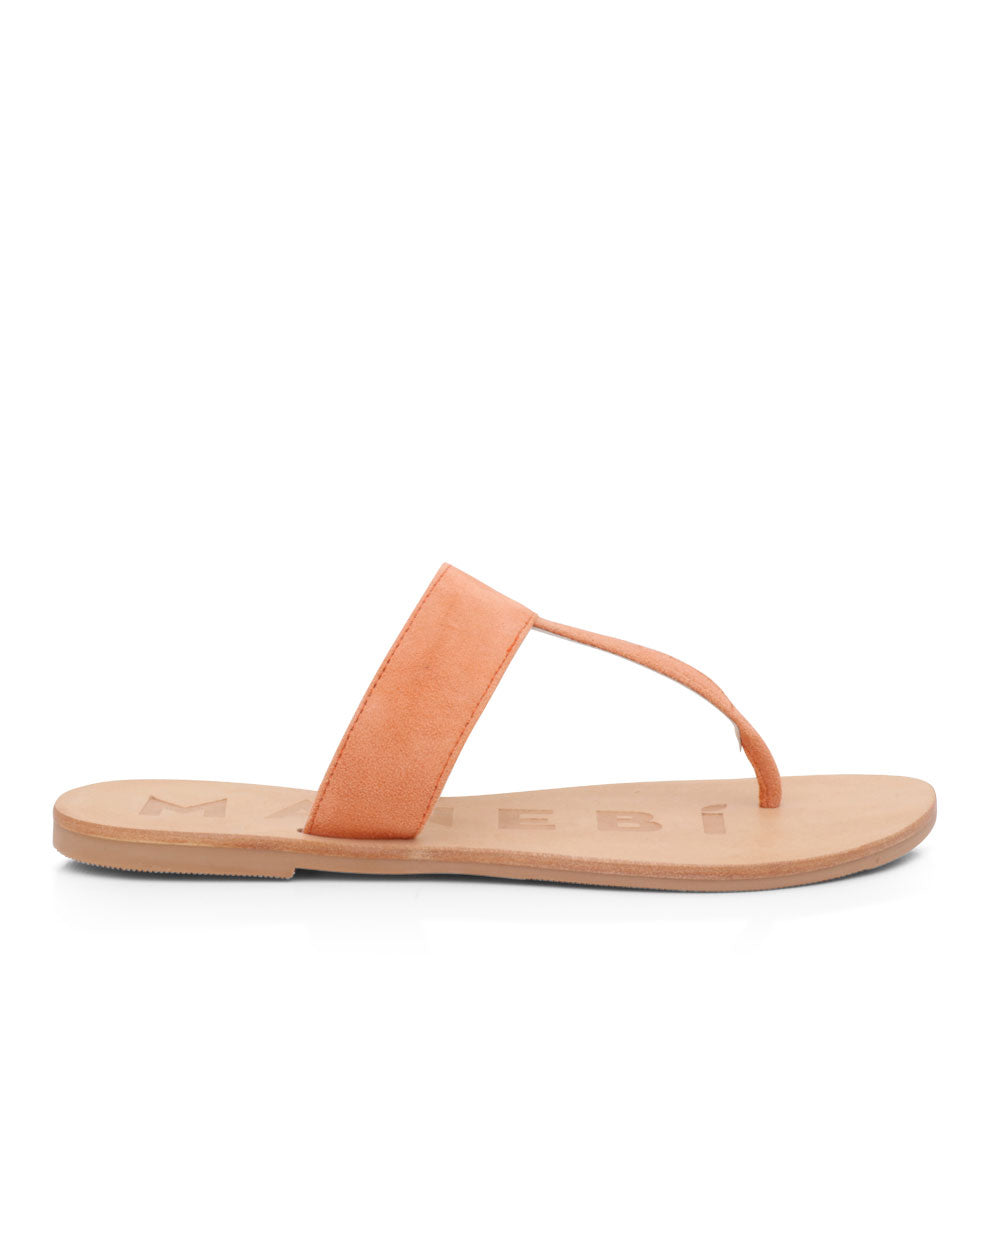 Manebi Suede Leather Sandals in Sunset Orange – Stanley Korshak